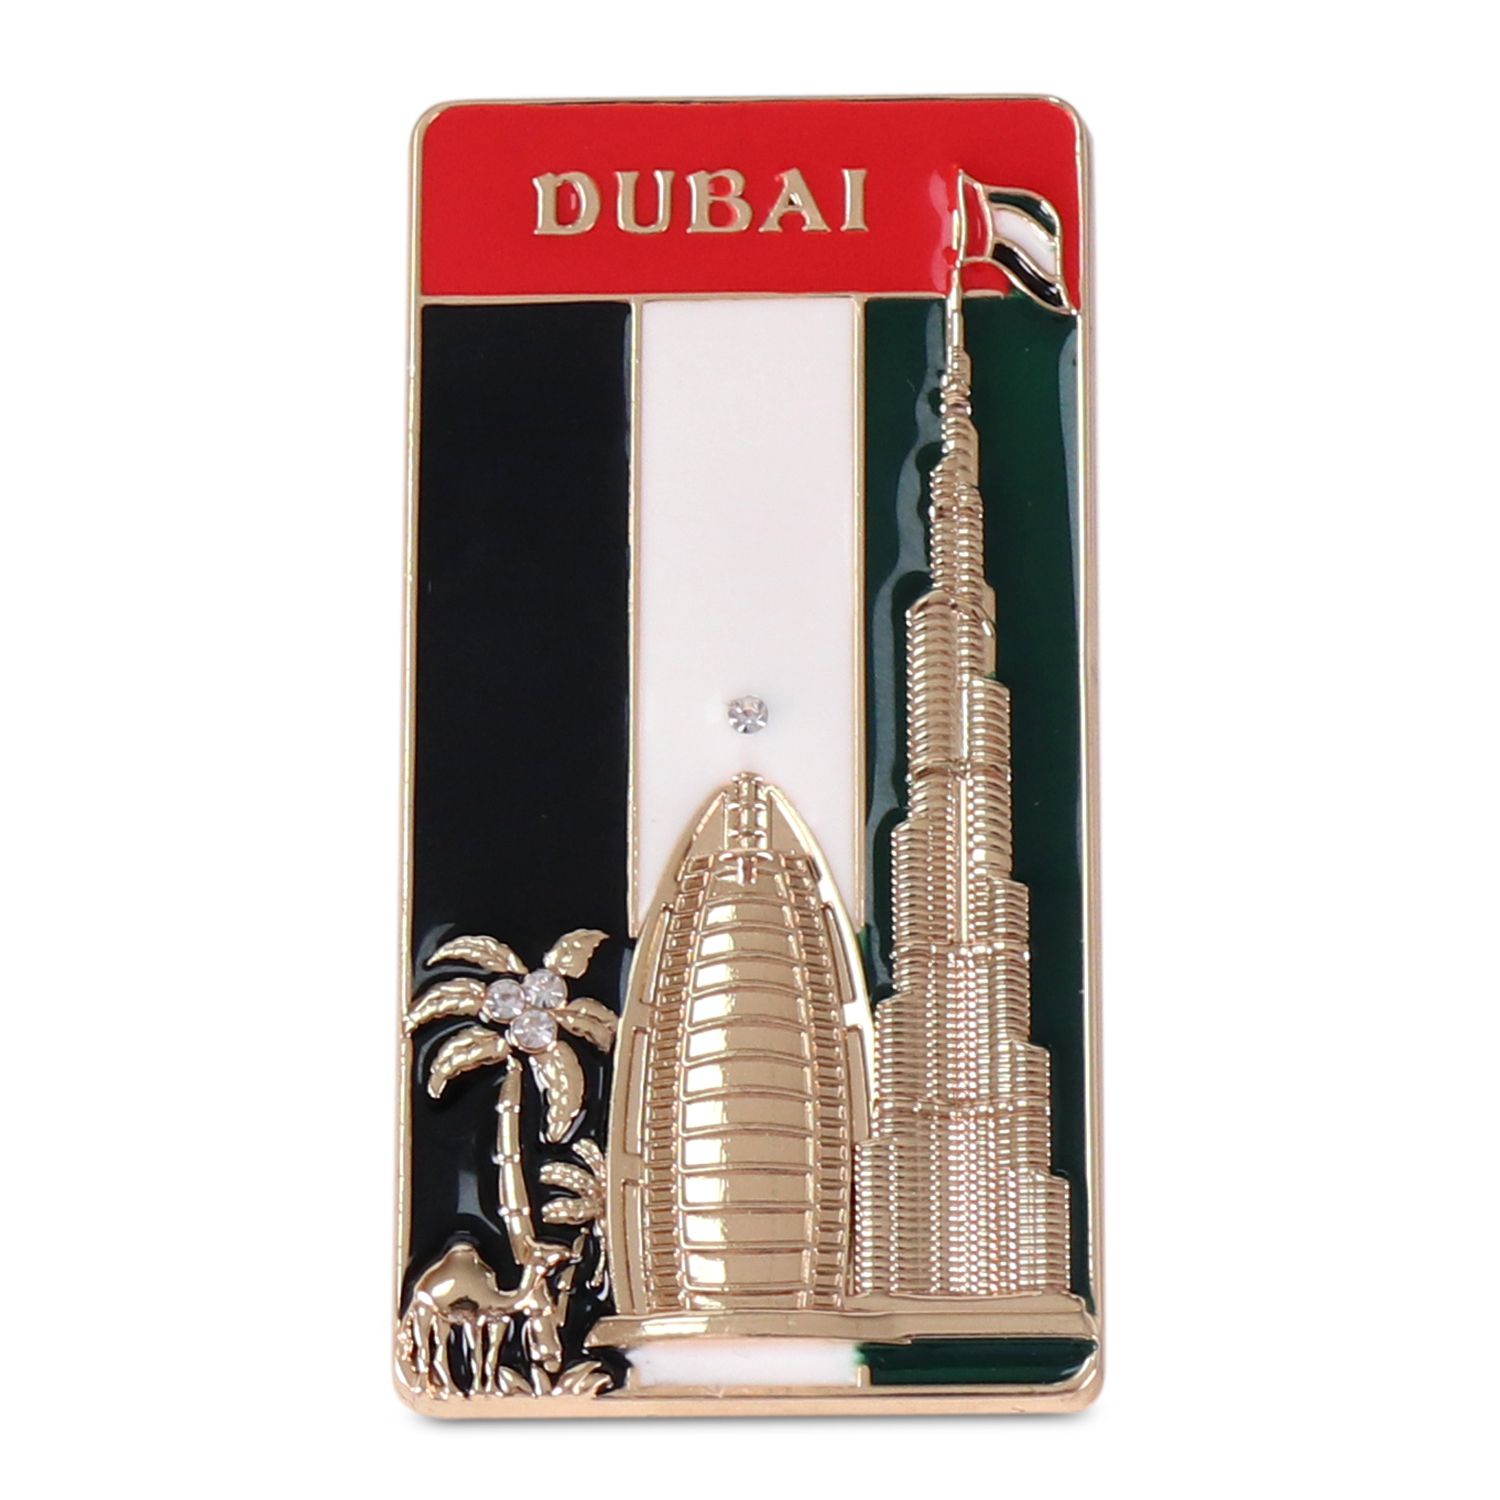 DUBAI  fridge magnet with  camel & Burj Al Arab Hotel & Burj Khalifa Tower